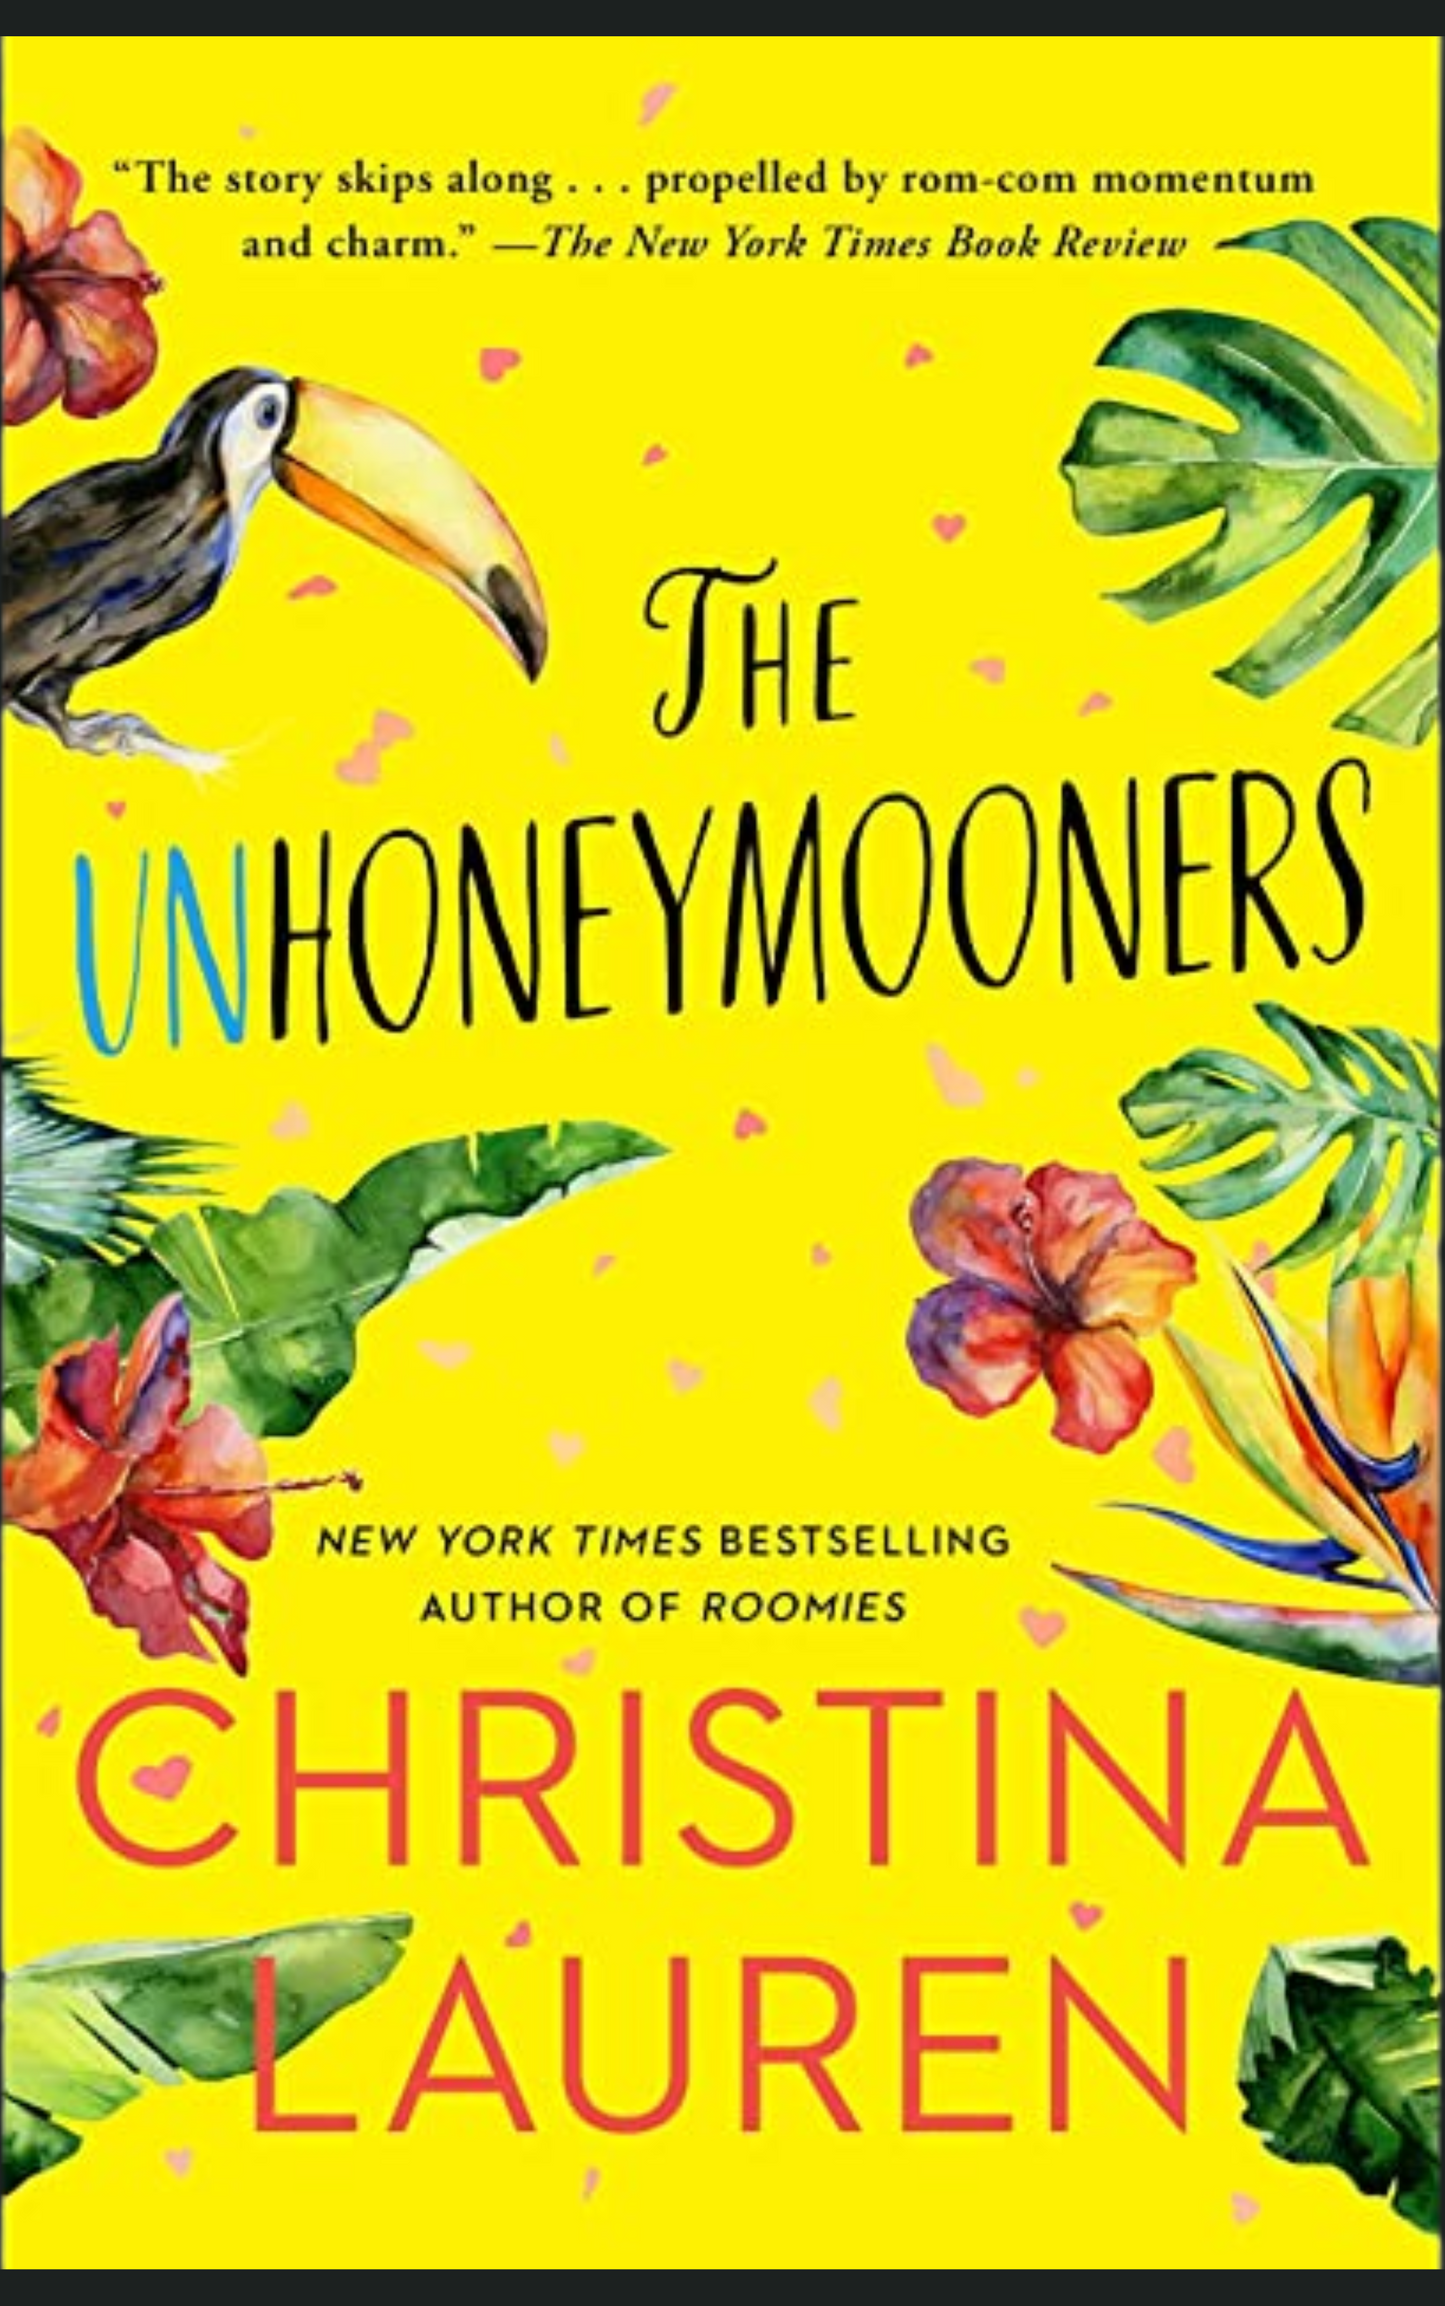 THE UNHONEYMOONERS by CHRISTINA LAUREN